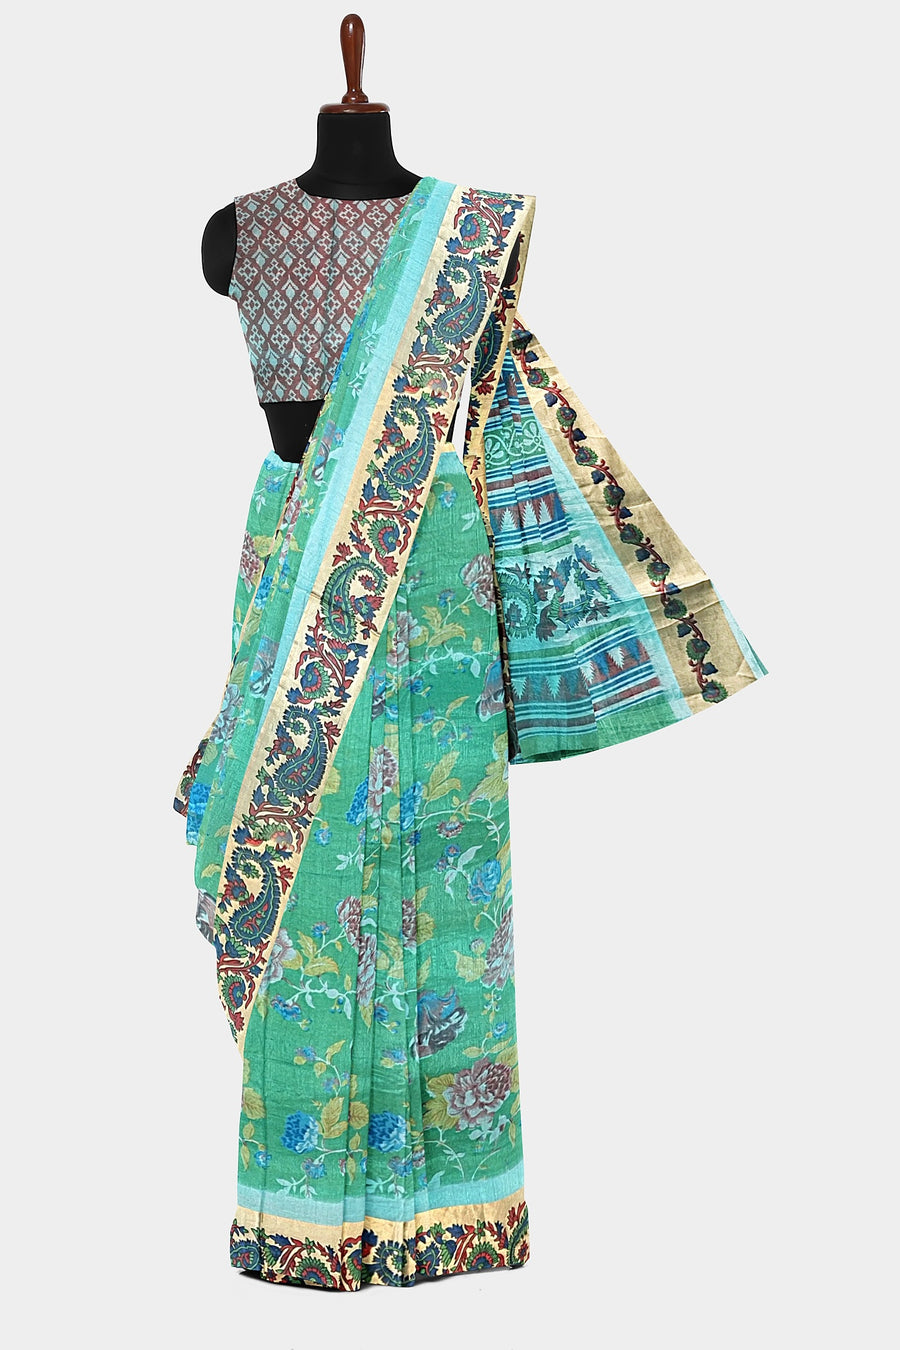 Silk Saree by Sarandhri Artisanal Dhaka Silk Enchanted Forest Drapes x One Blouse